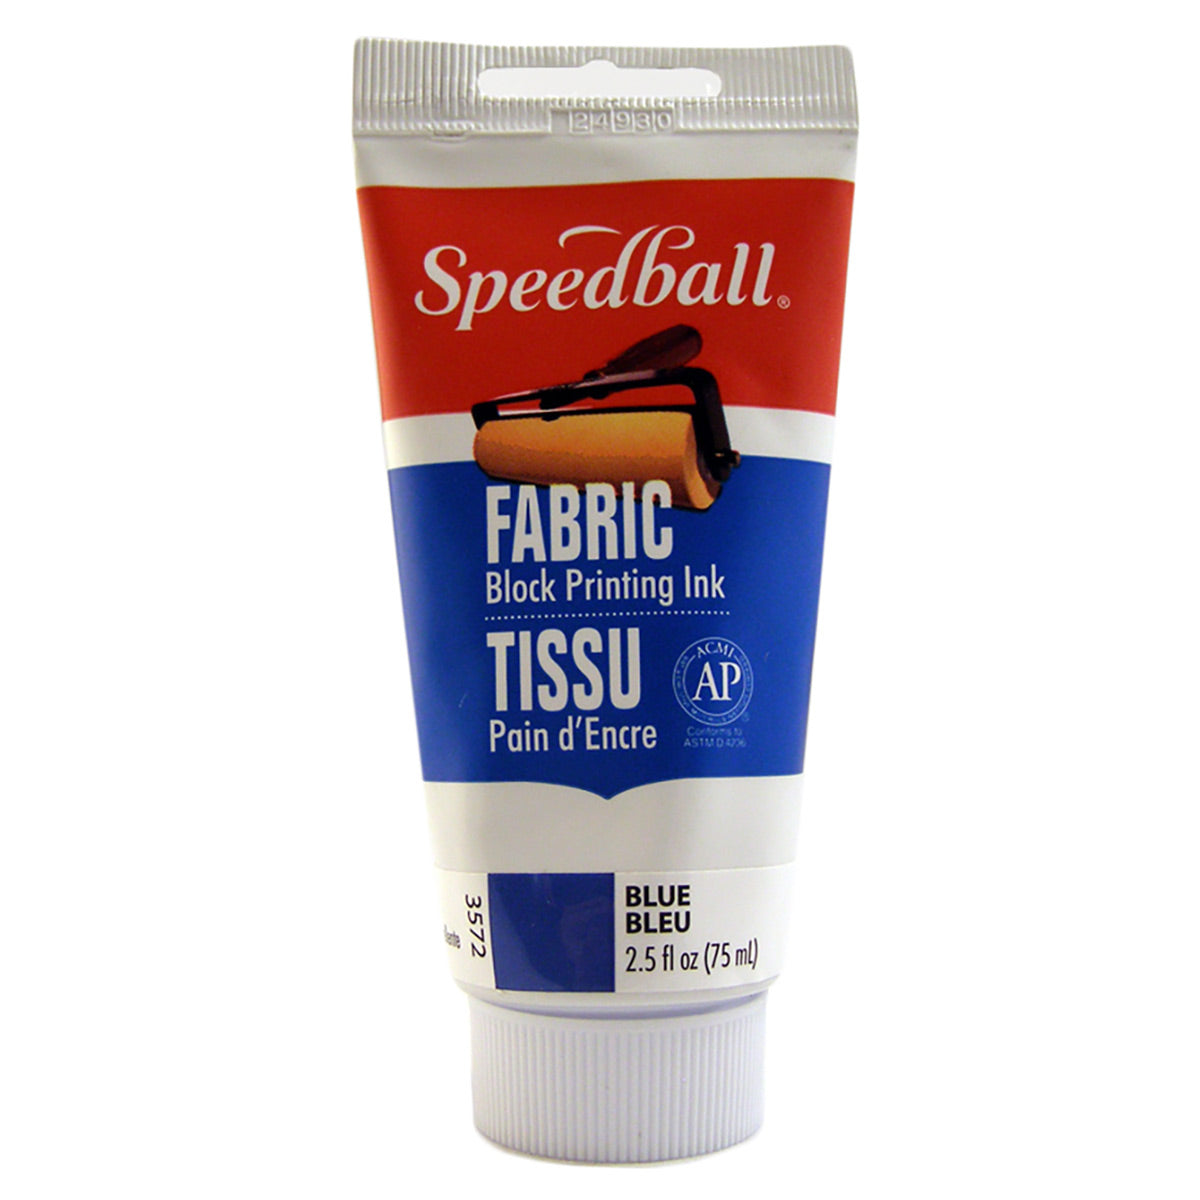 Speedball - Fabric Block Printing Ink 75ml (2.5oz) - Blue